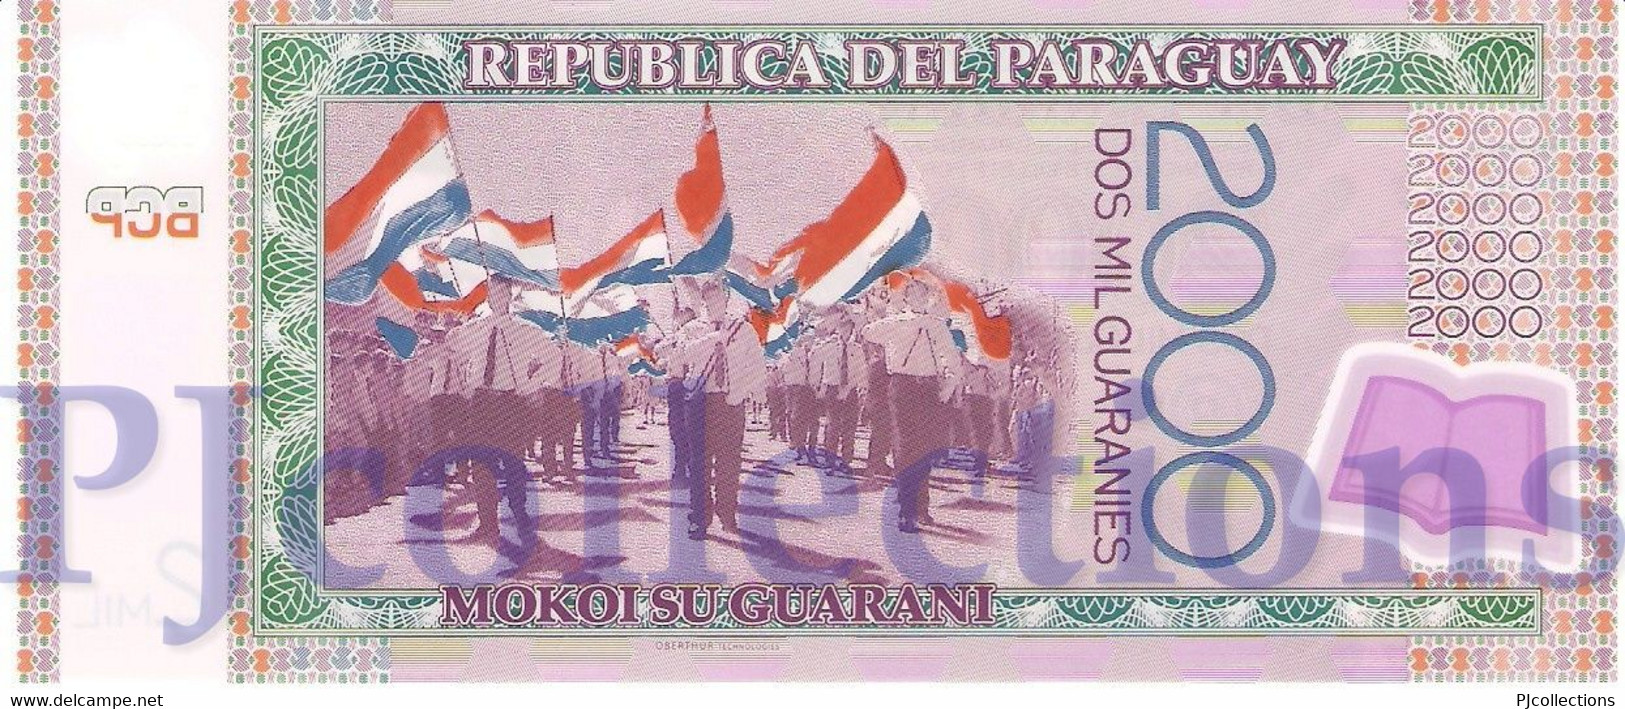 PARAGUAY 2000 GUARANIES 2008 PICK 228a POLYMER UNC PREFIX "A" - Paraguay